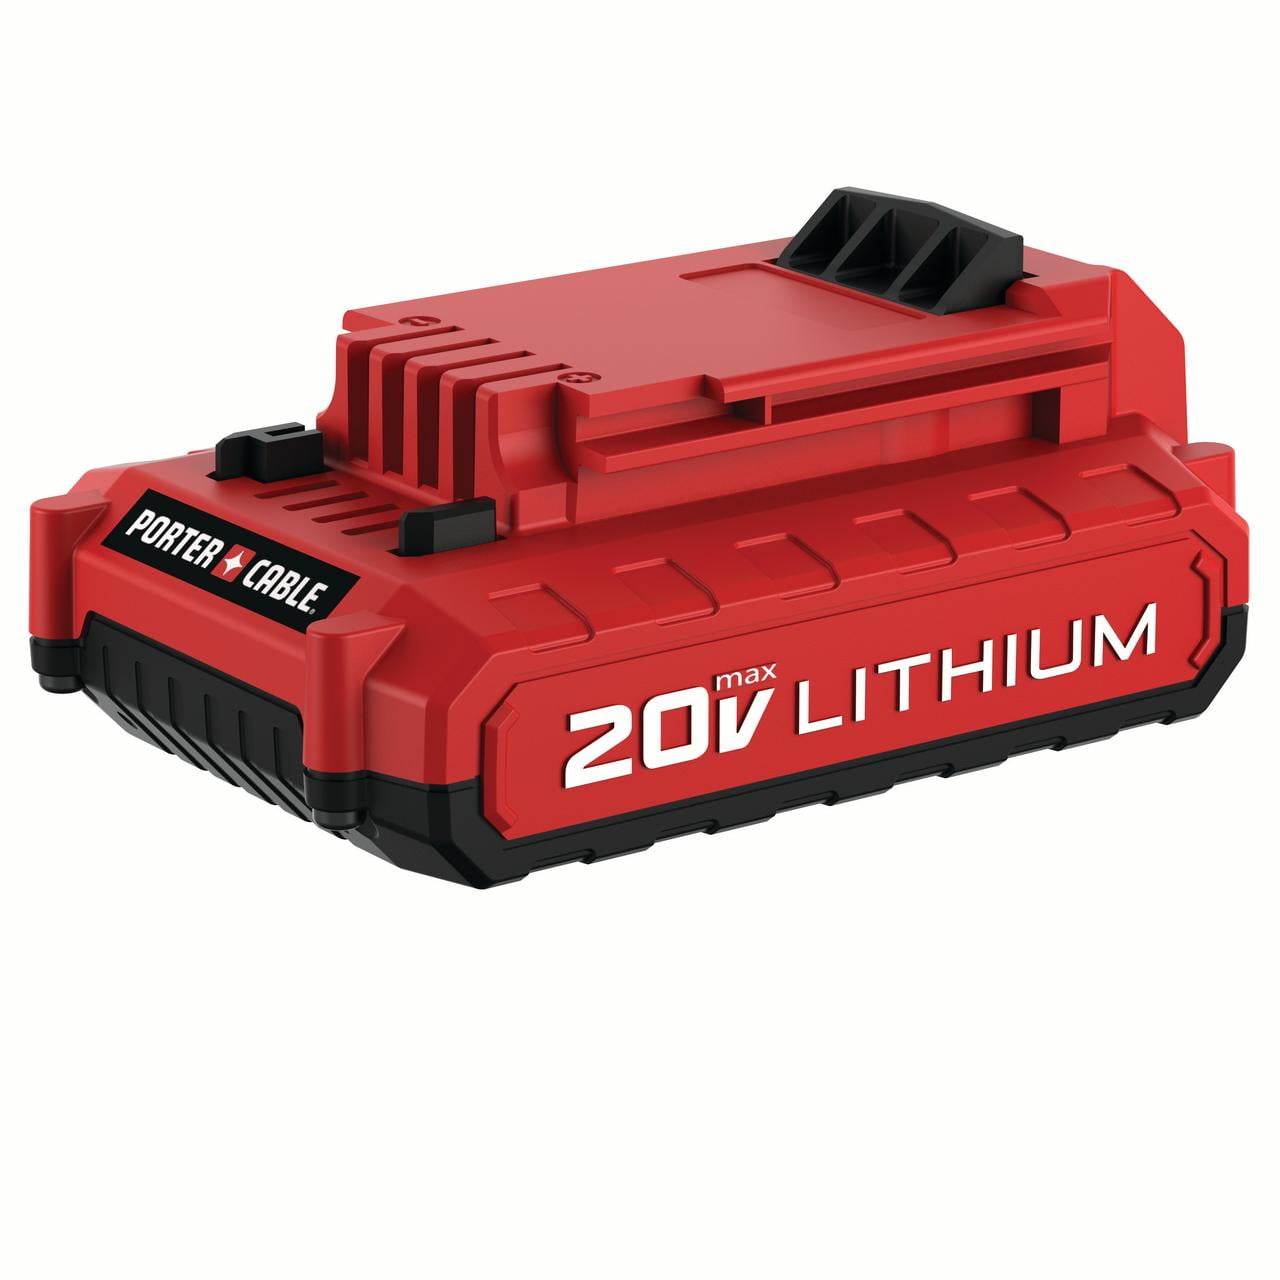 2× 20V Max 5000mAh Lithium Battery for PORTER CABLE 20 Volt PCC680L PCC685L US 